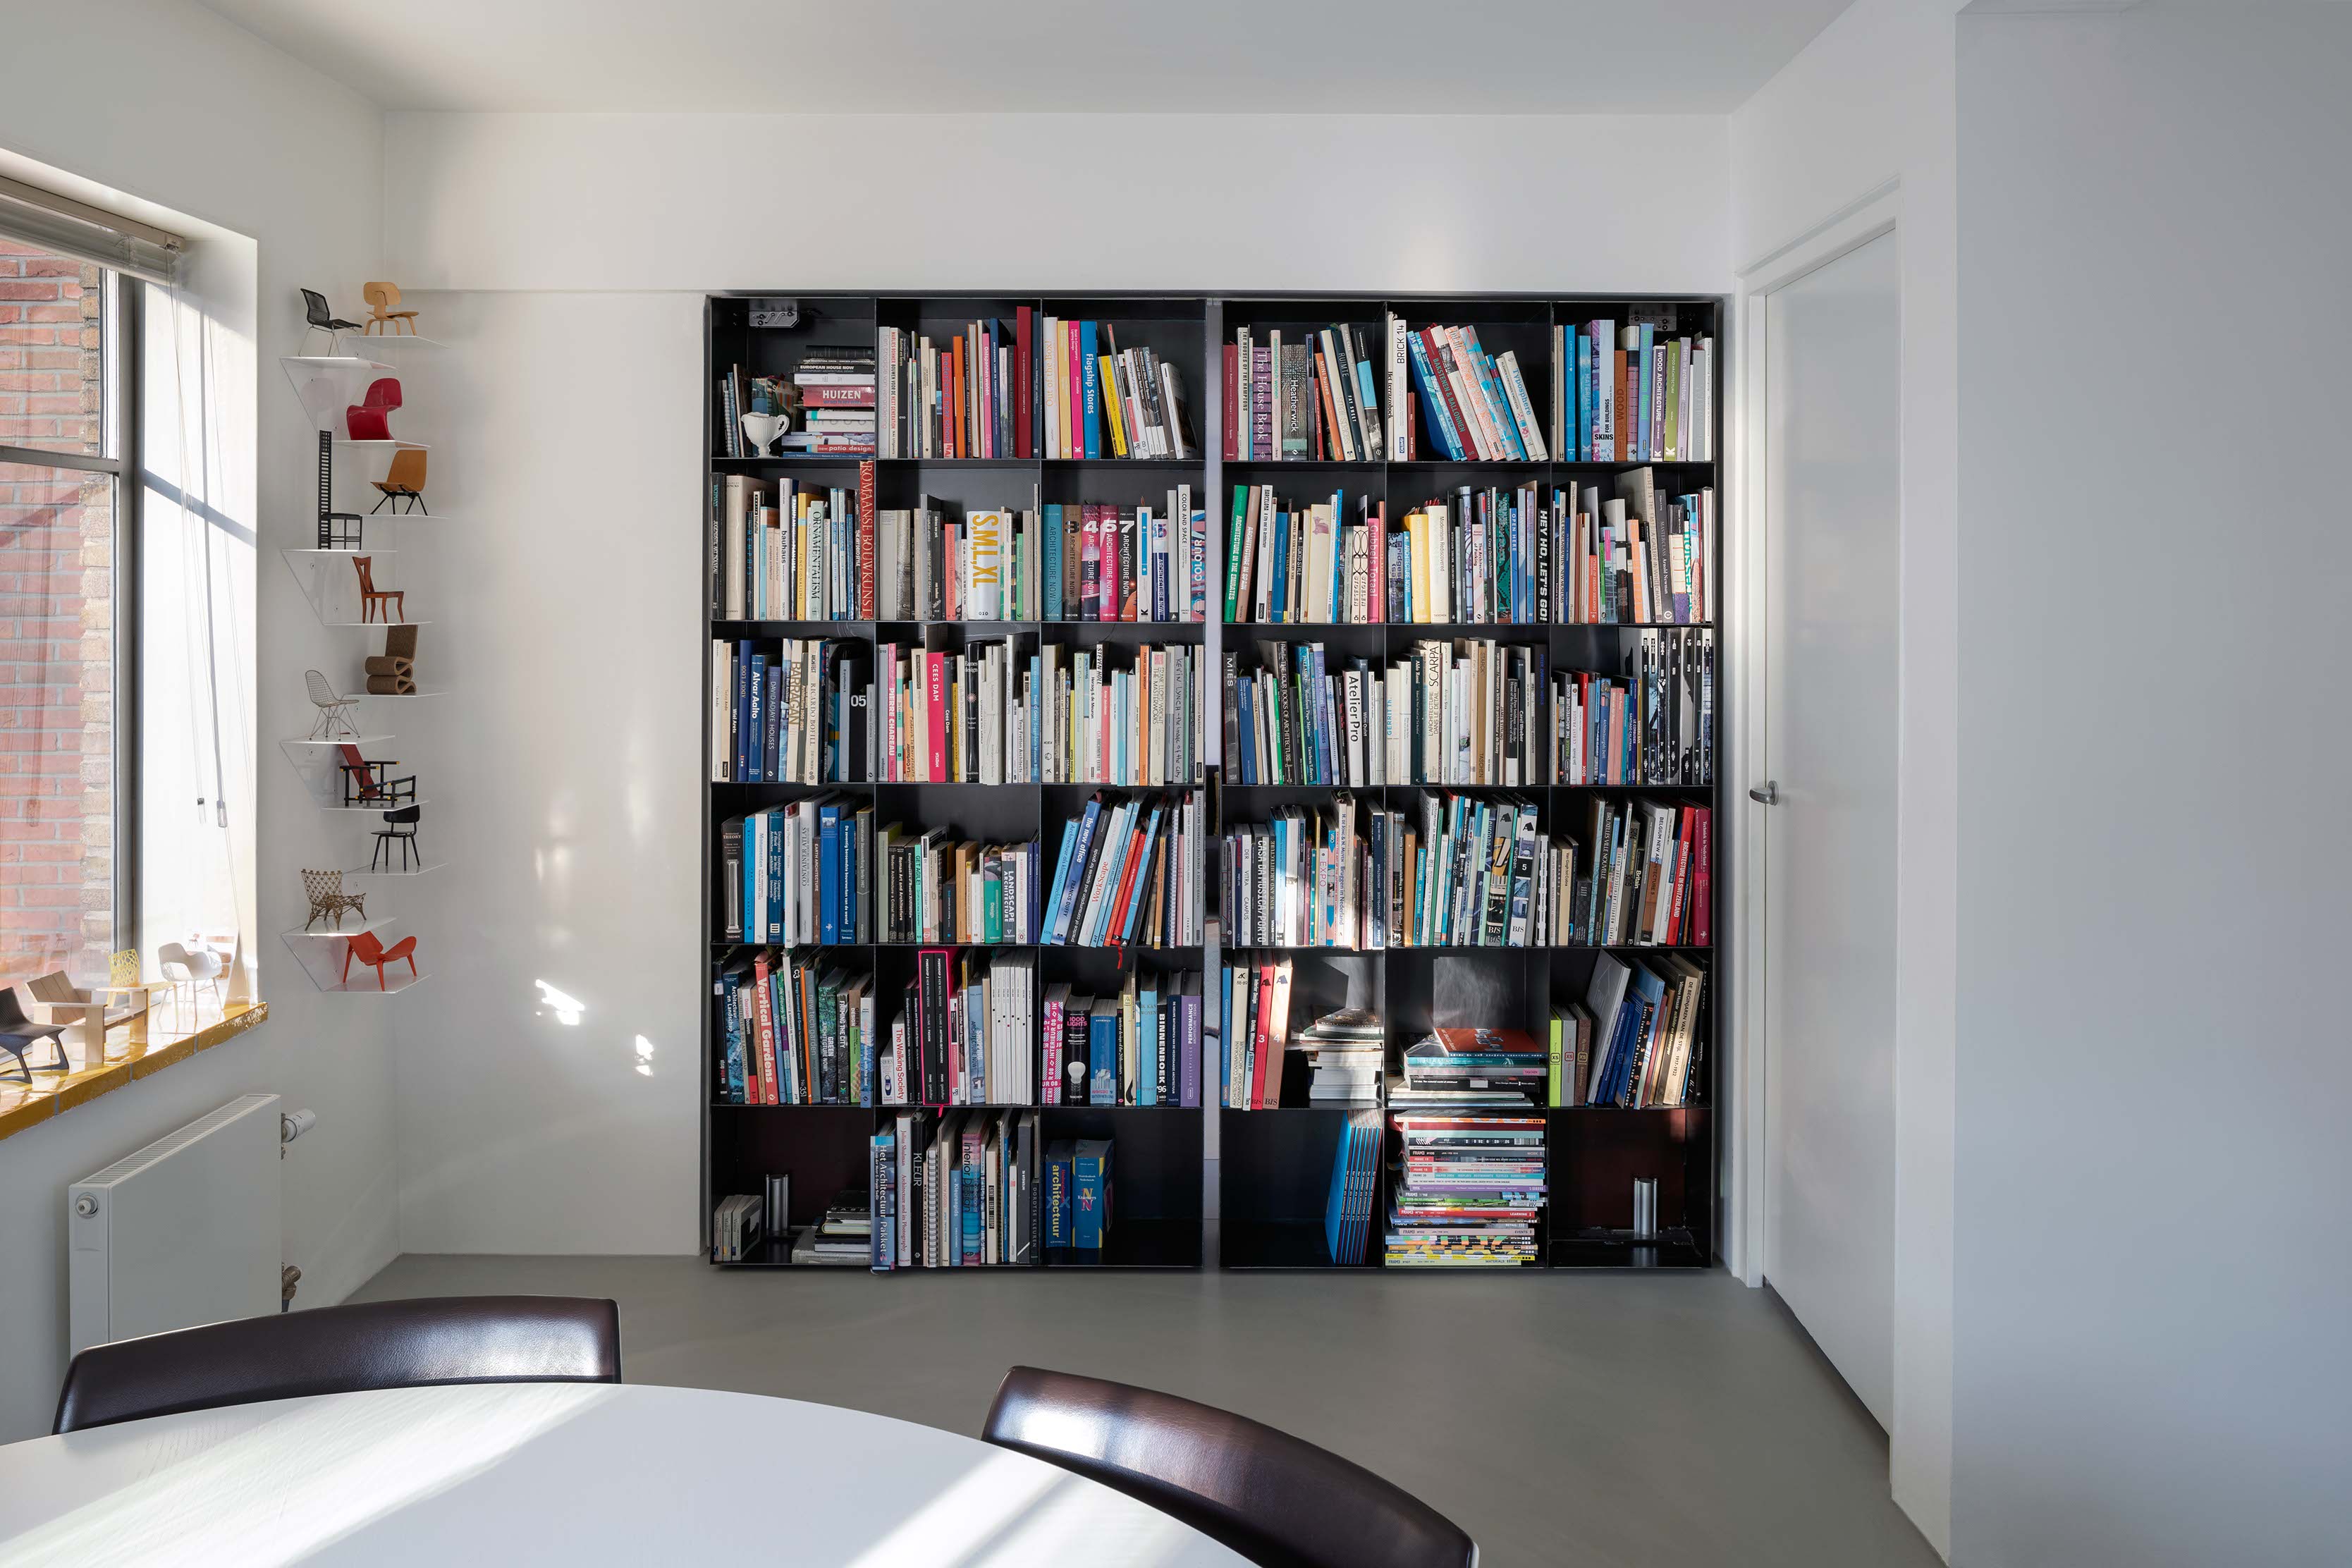 204.5-Bookcase-pivot-doors-designed-by-Hoek-en-de-Wit-Architecten---FritsJurgens-pivot-hinges-Inside.jpeg